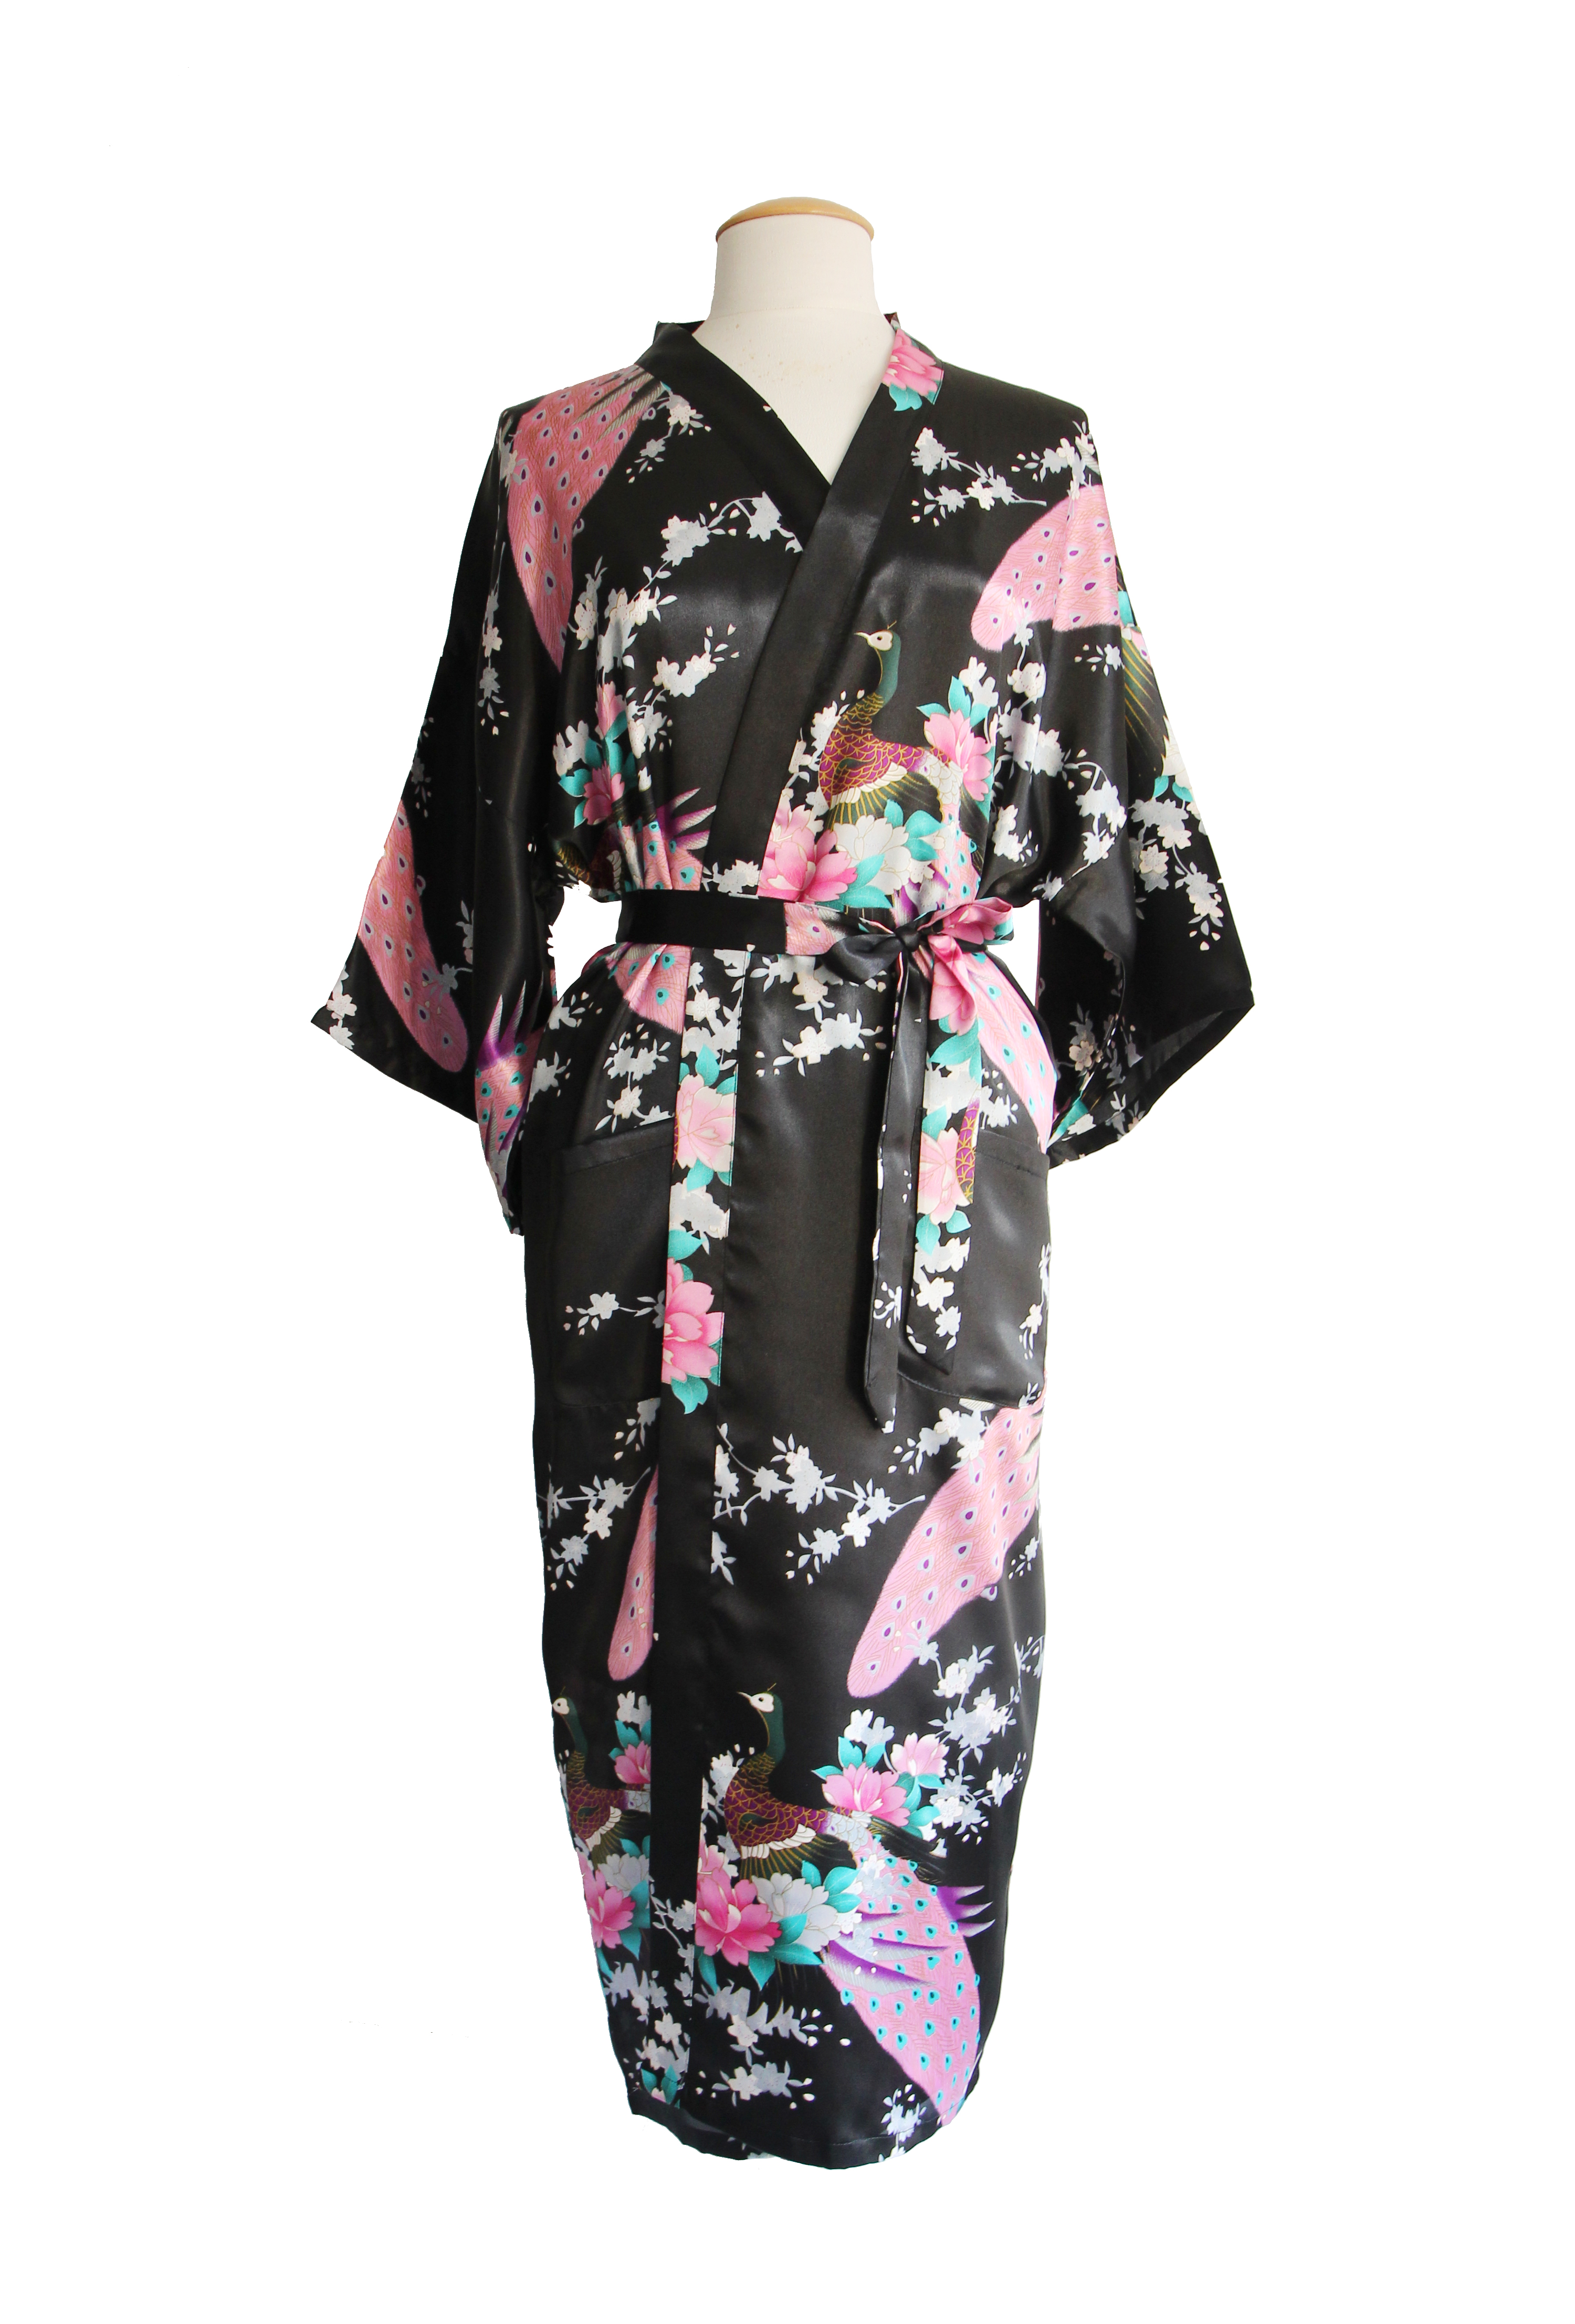 munt selecteer Heup Zwarte kimono satijn Japanse satijnen badjas kamerjas geisha ochtendjas  yukata kopen?